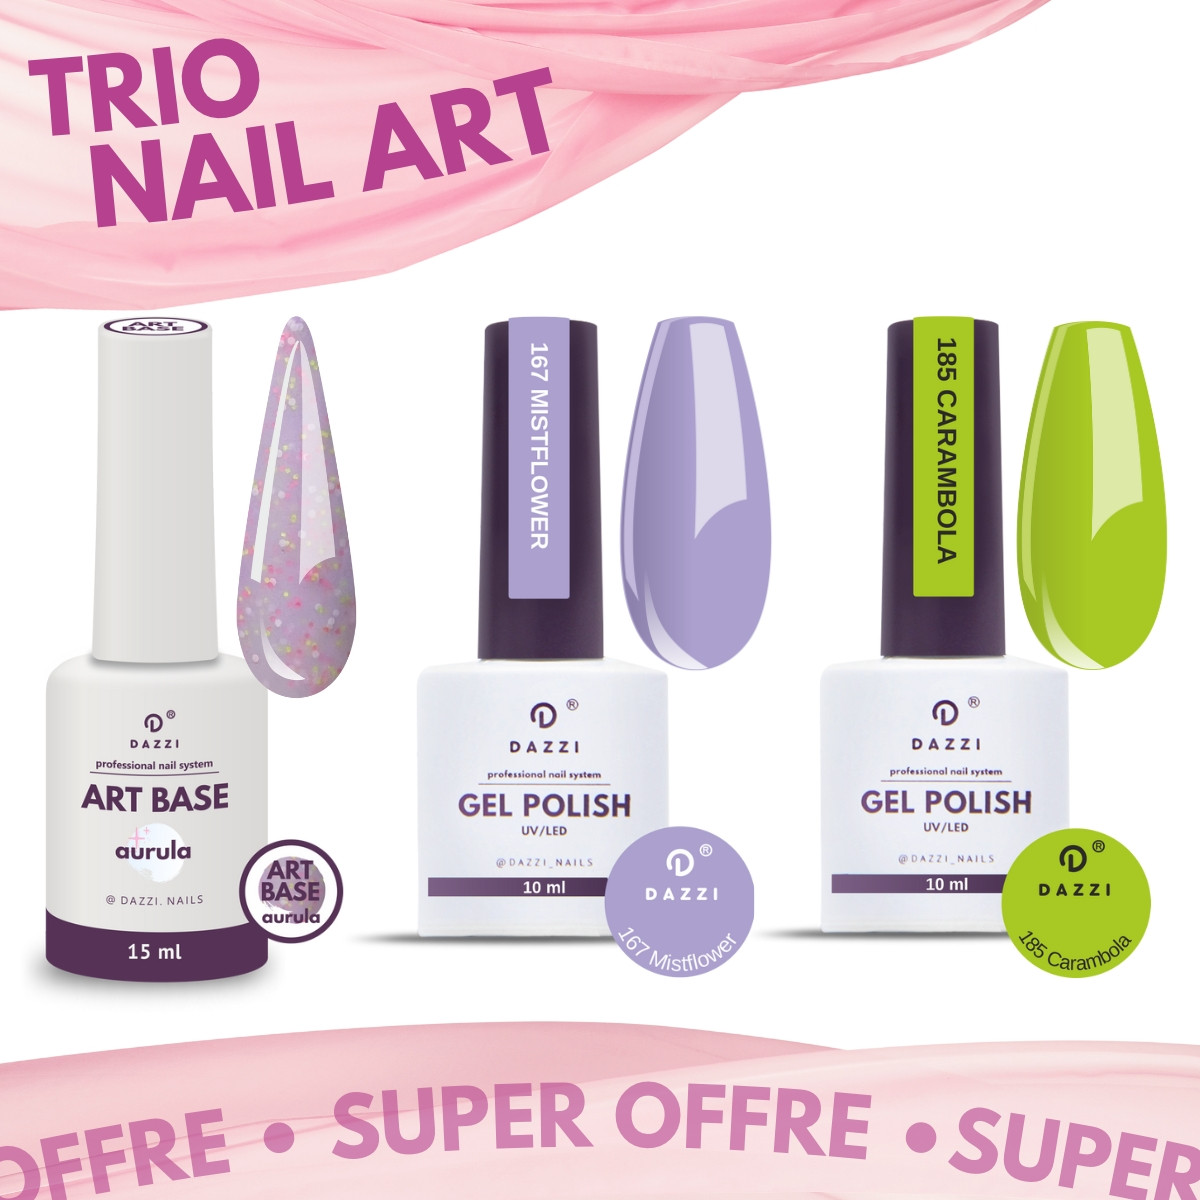 Super offre TRIO Nail Art: "Art Base Aurula", "VSP 167", "VSP 185", pour VSP ou Gel, 15ml